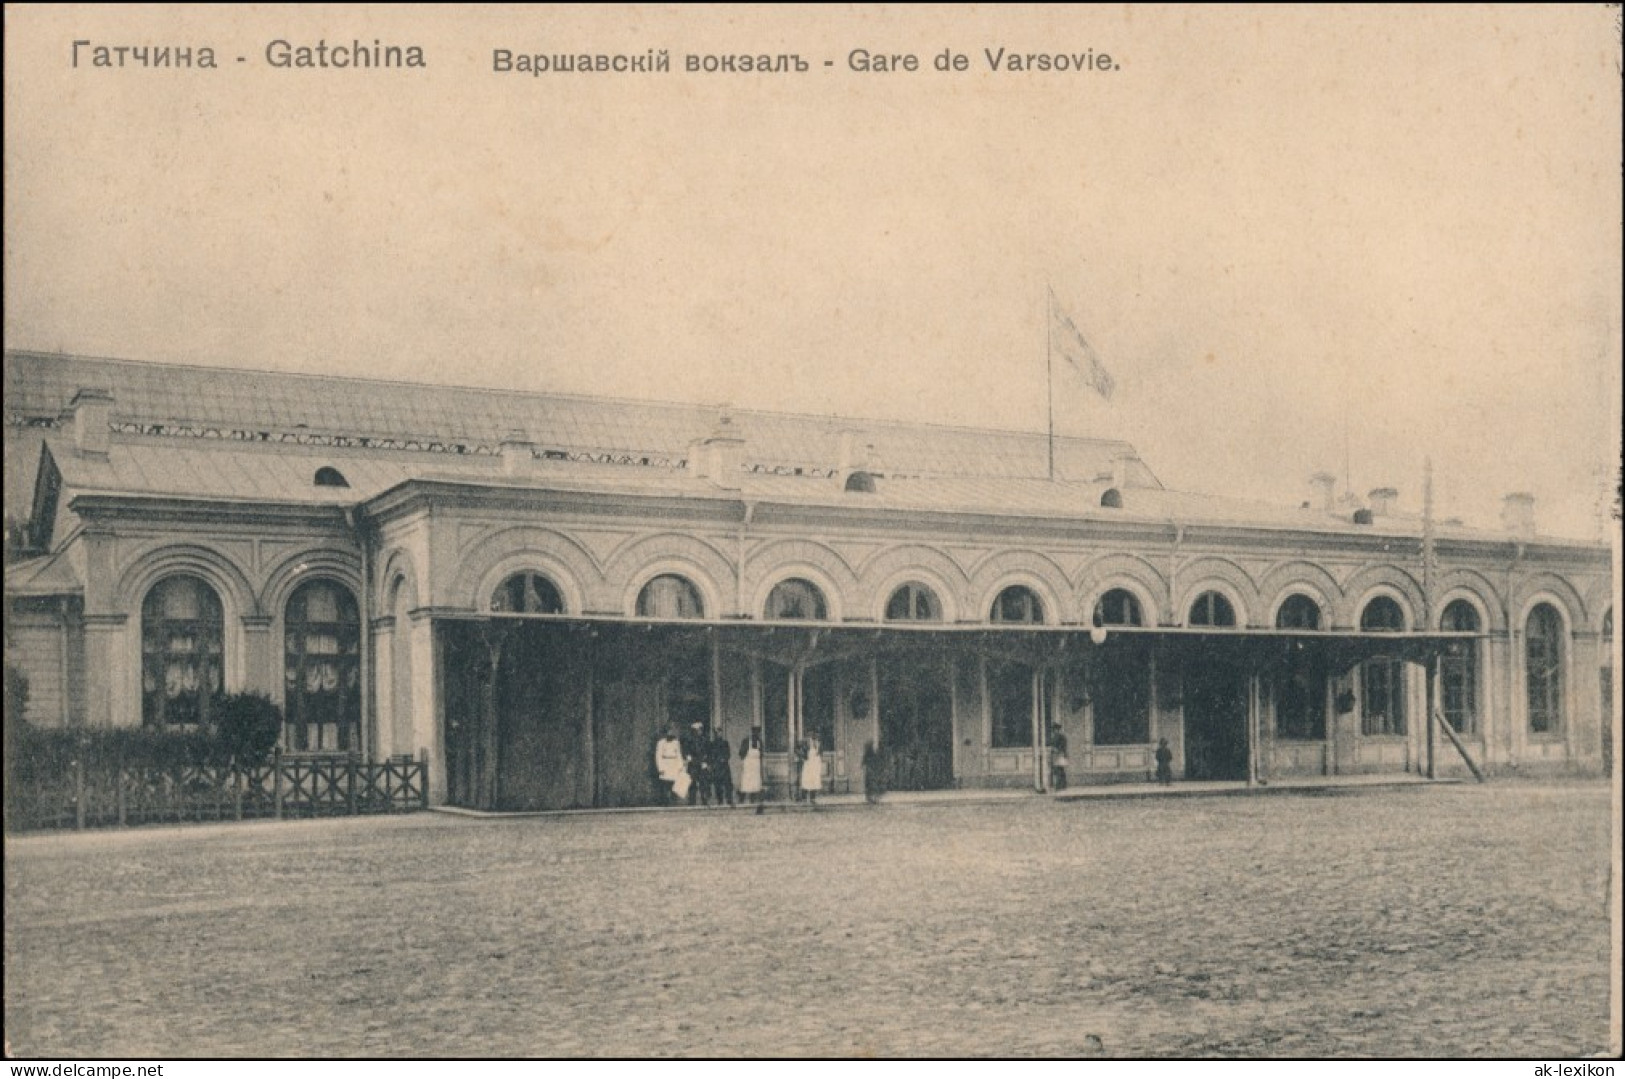 Postcard Gattschina Га́тчина Warschauer Bahnhof Russland Россия1 Russia 1912 - Russland